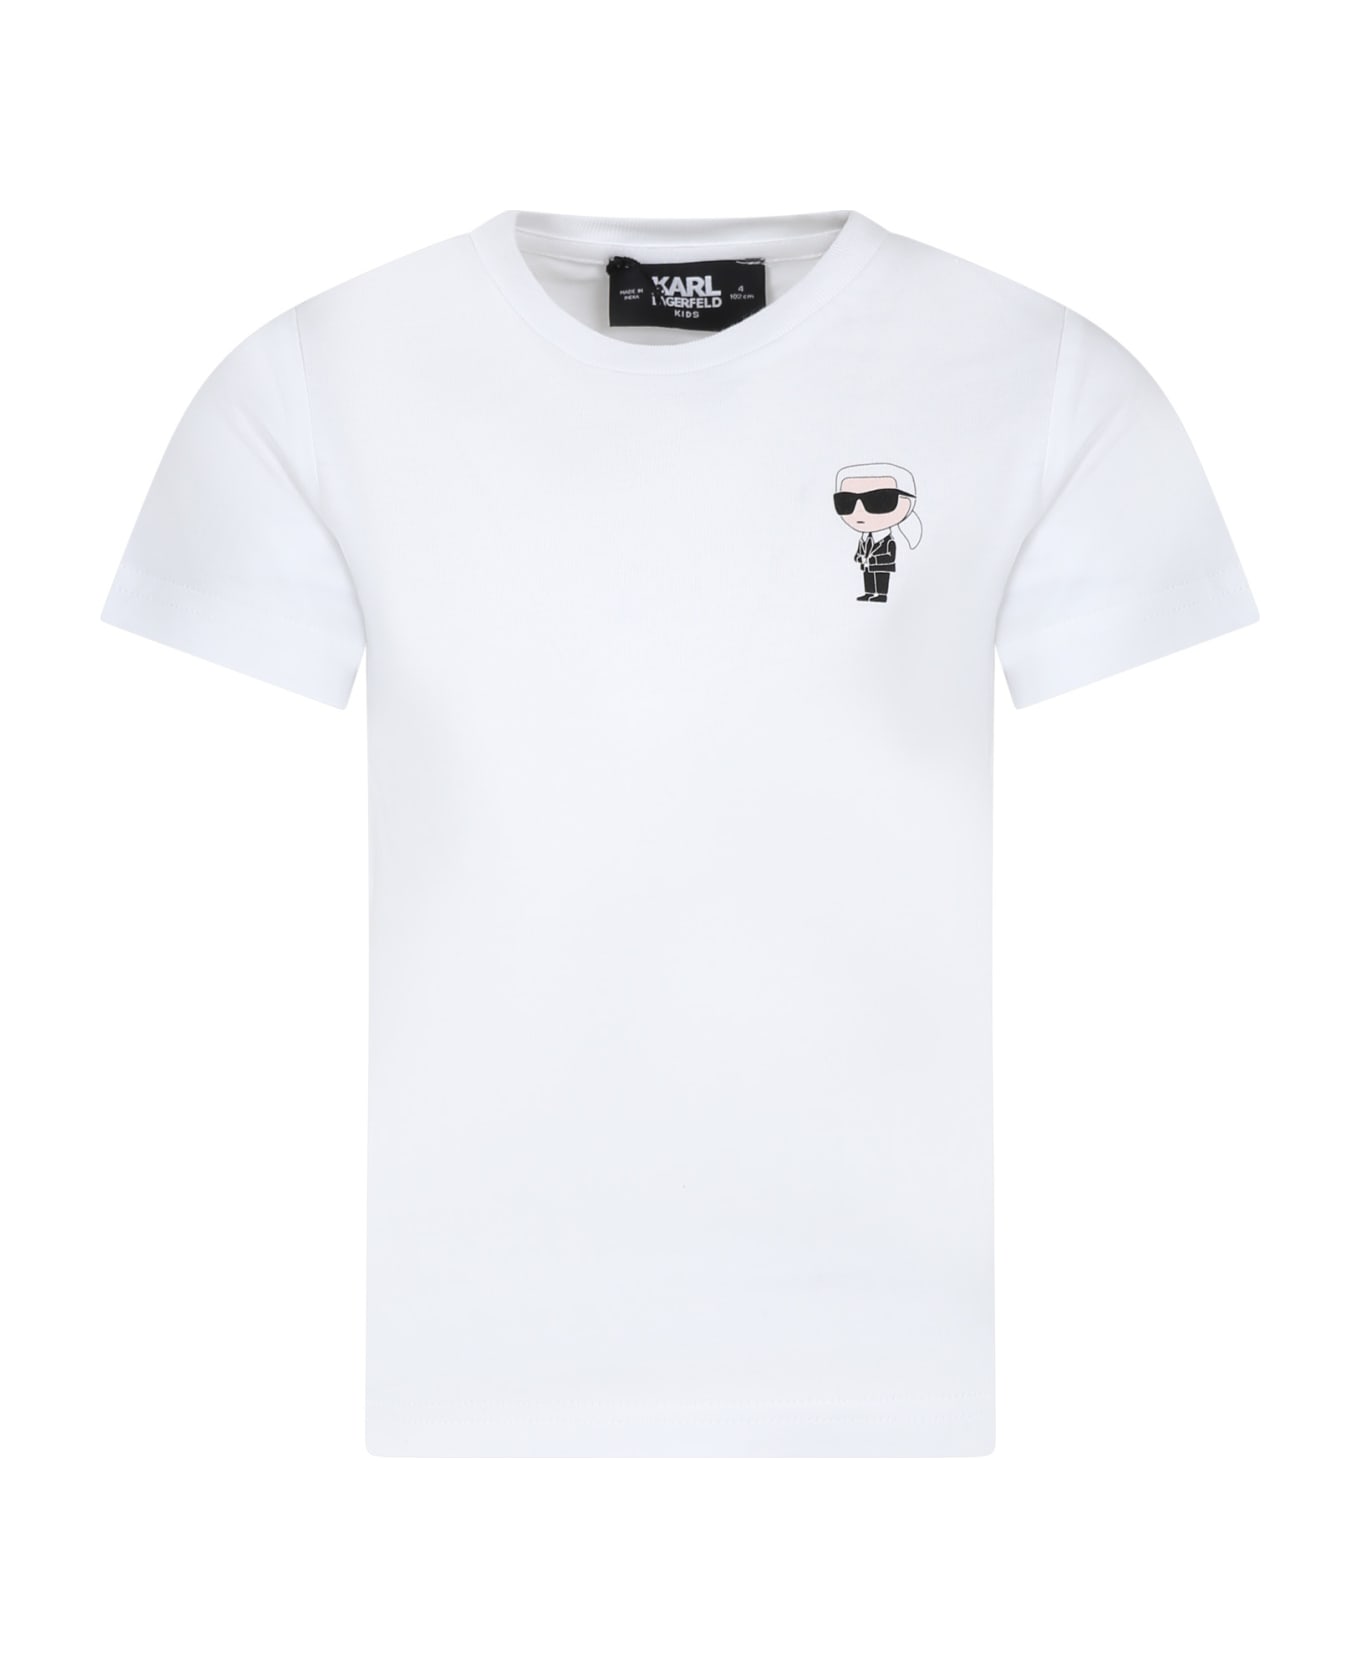 Karl Lagerfeld Kids White T-shirt For Boy With Karl Print - White